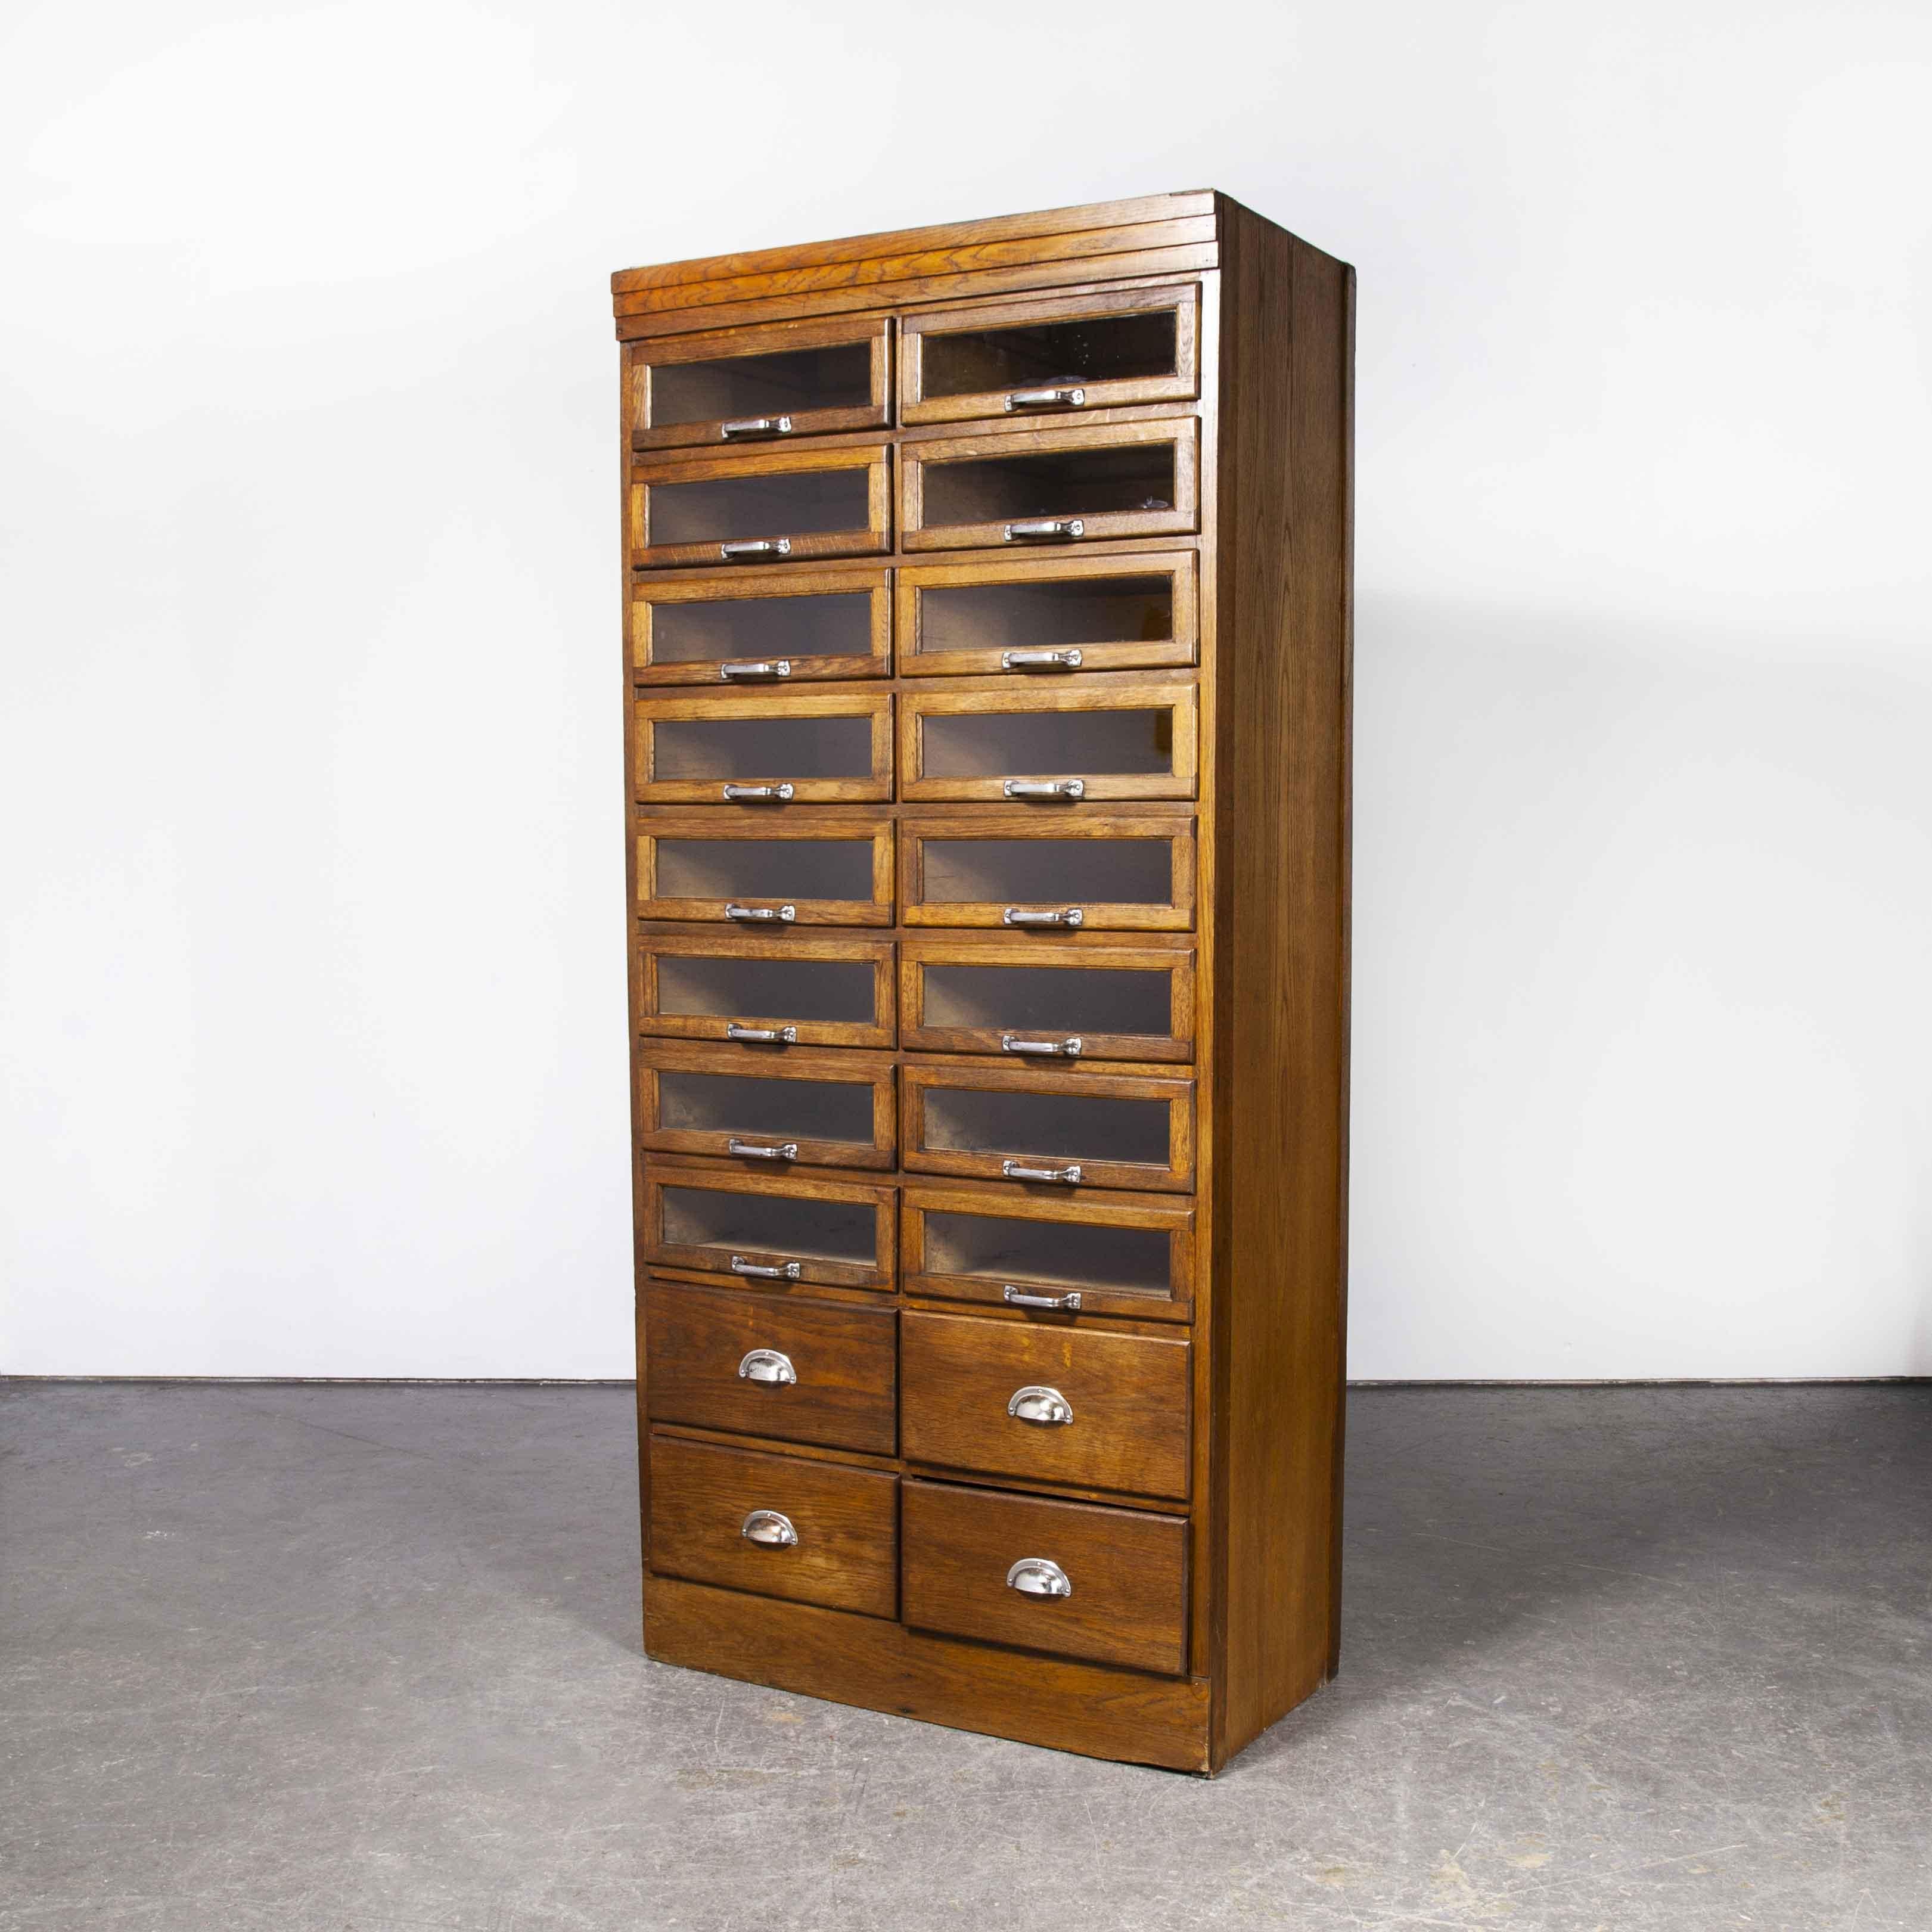 British 1940's Tall Glass Fronted Habersdashery Cabinet, Twenty Drawers